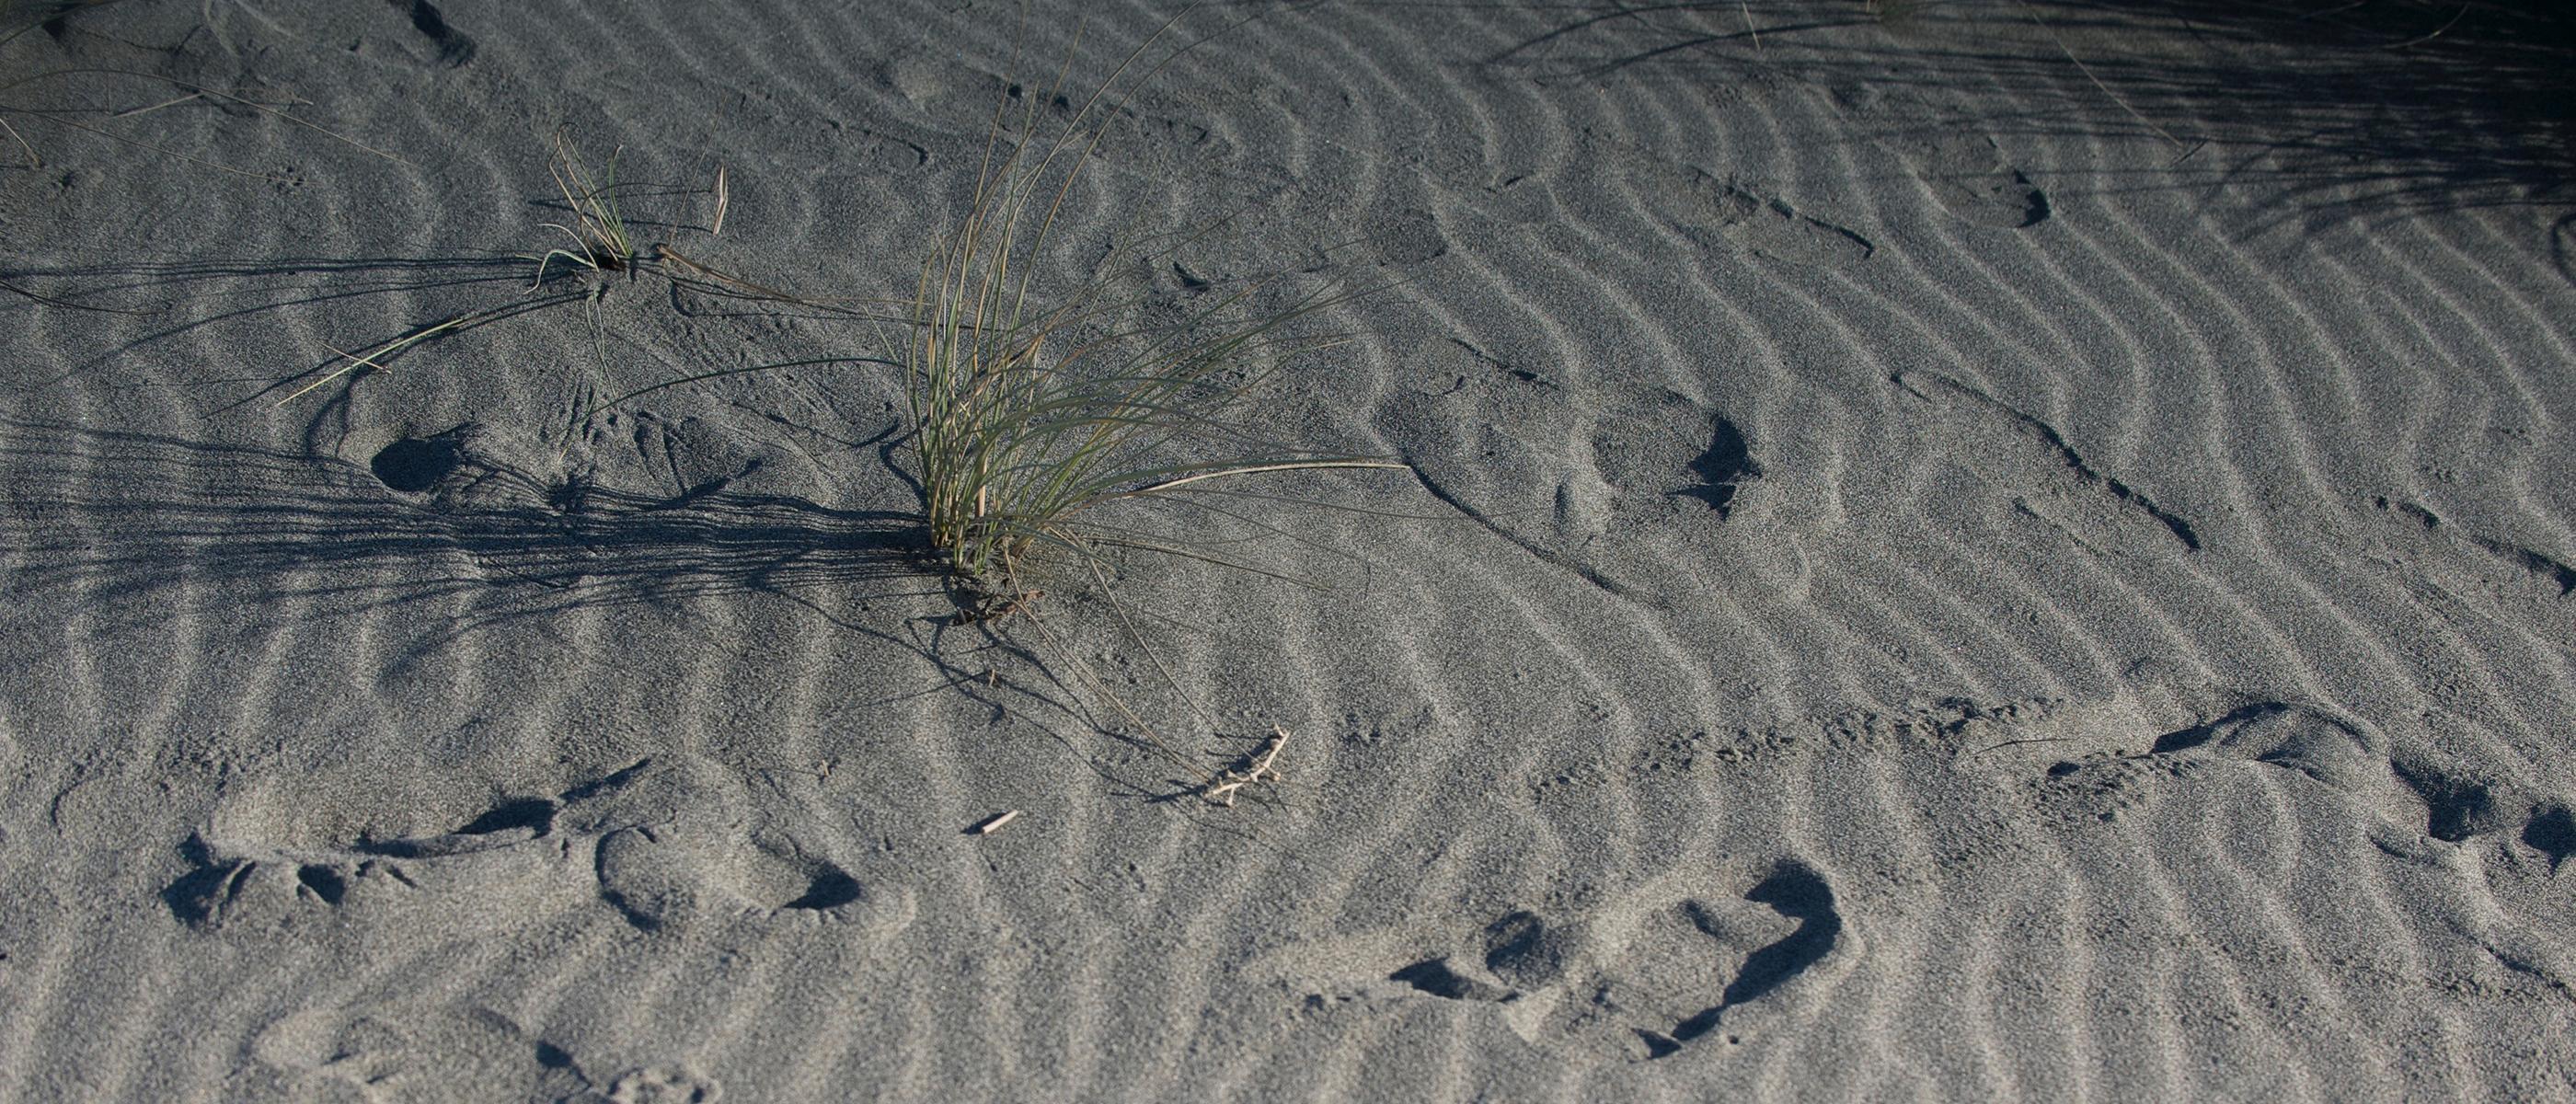 sandy beach with footprints